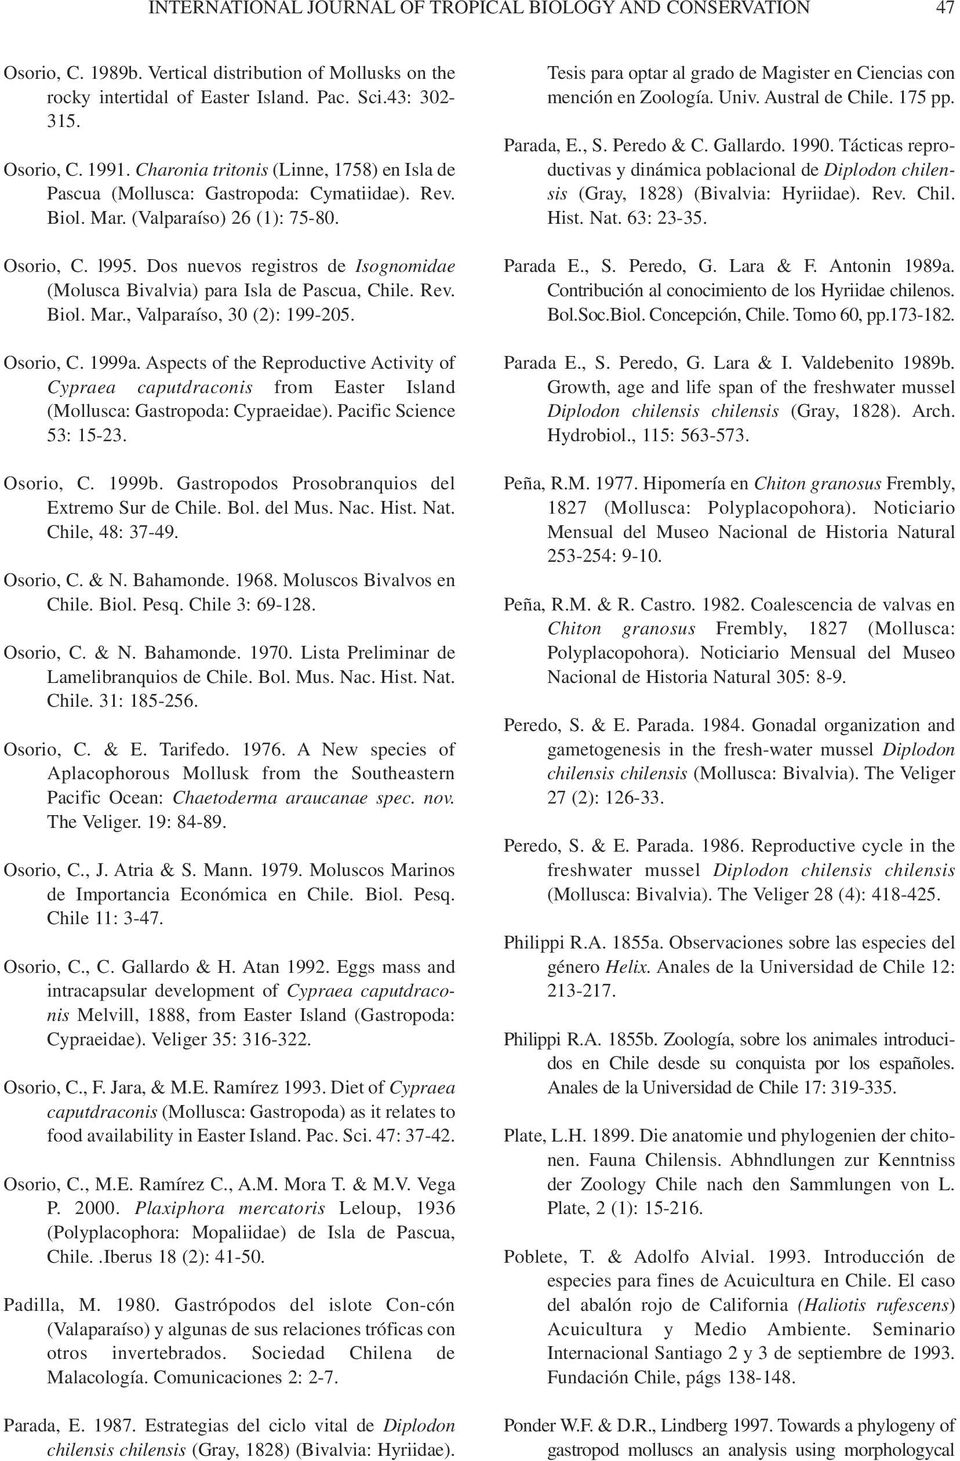 Dos nuevos registros de Isognomidae (Molusca Bivalvia) para Isla de Pascua, Chile. Rev. Biol. Mar., Valparaíso, 30 (2): 199-205. Osorio, C. 1999a.